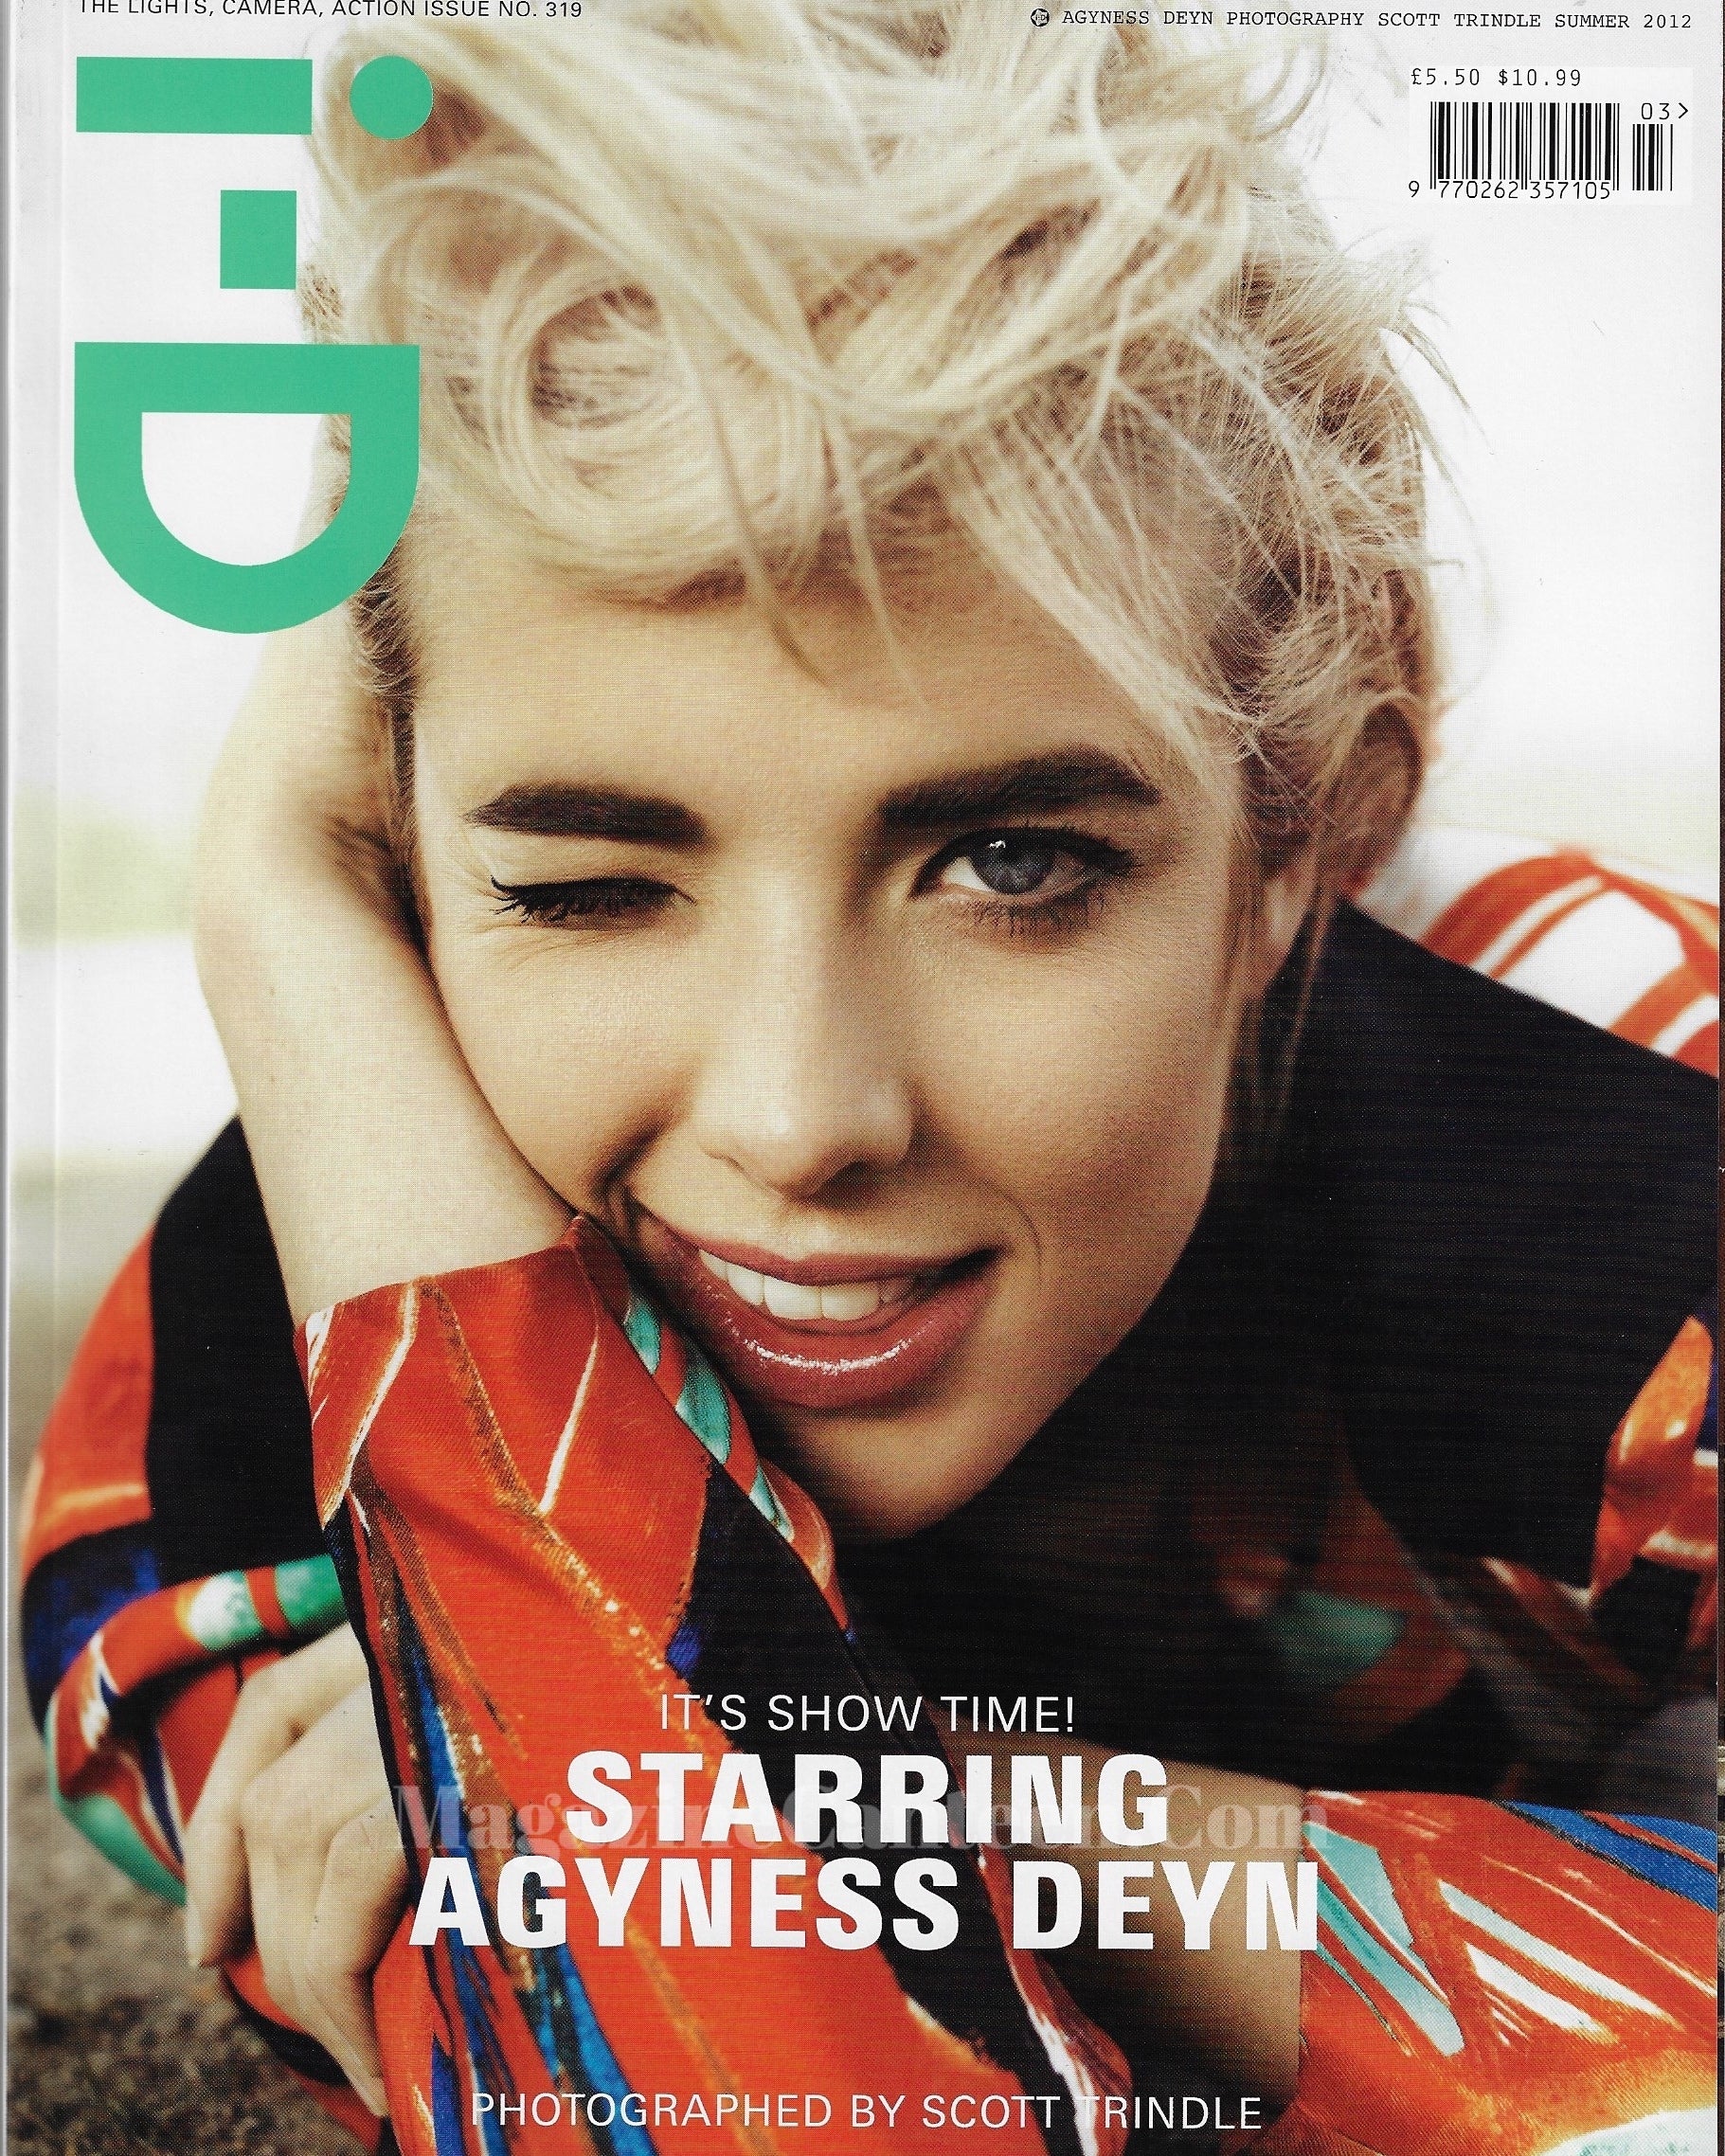 I-D Magazine 319 - Agyness Deyn 2012